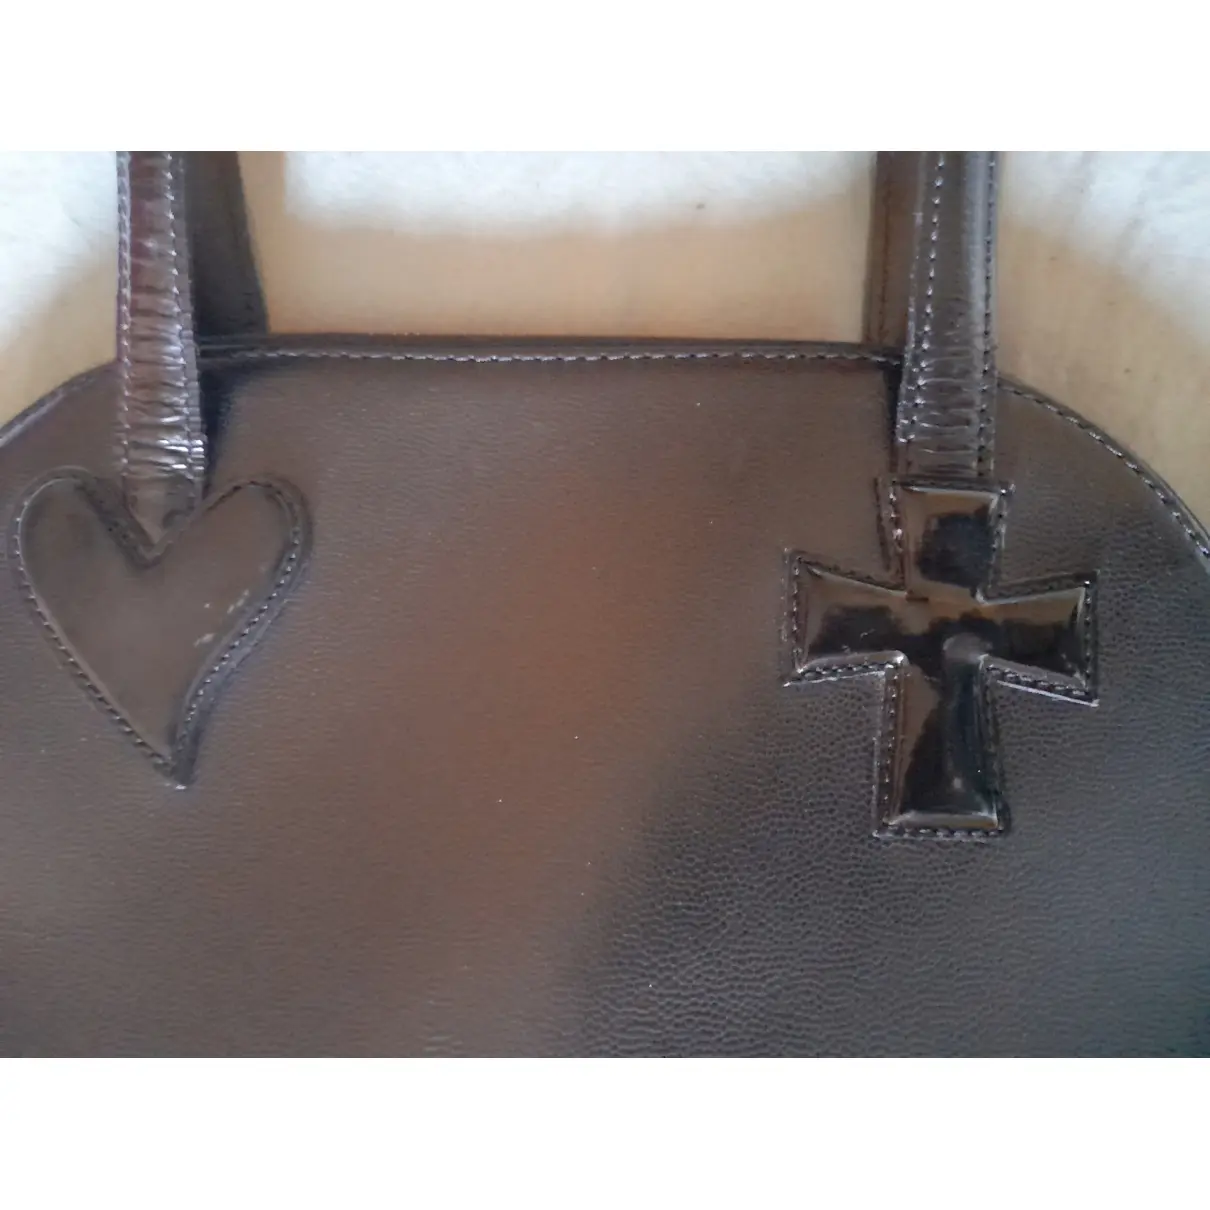 Leather handbag Christian Lacroix